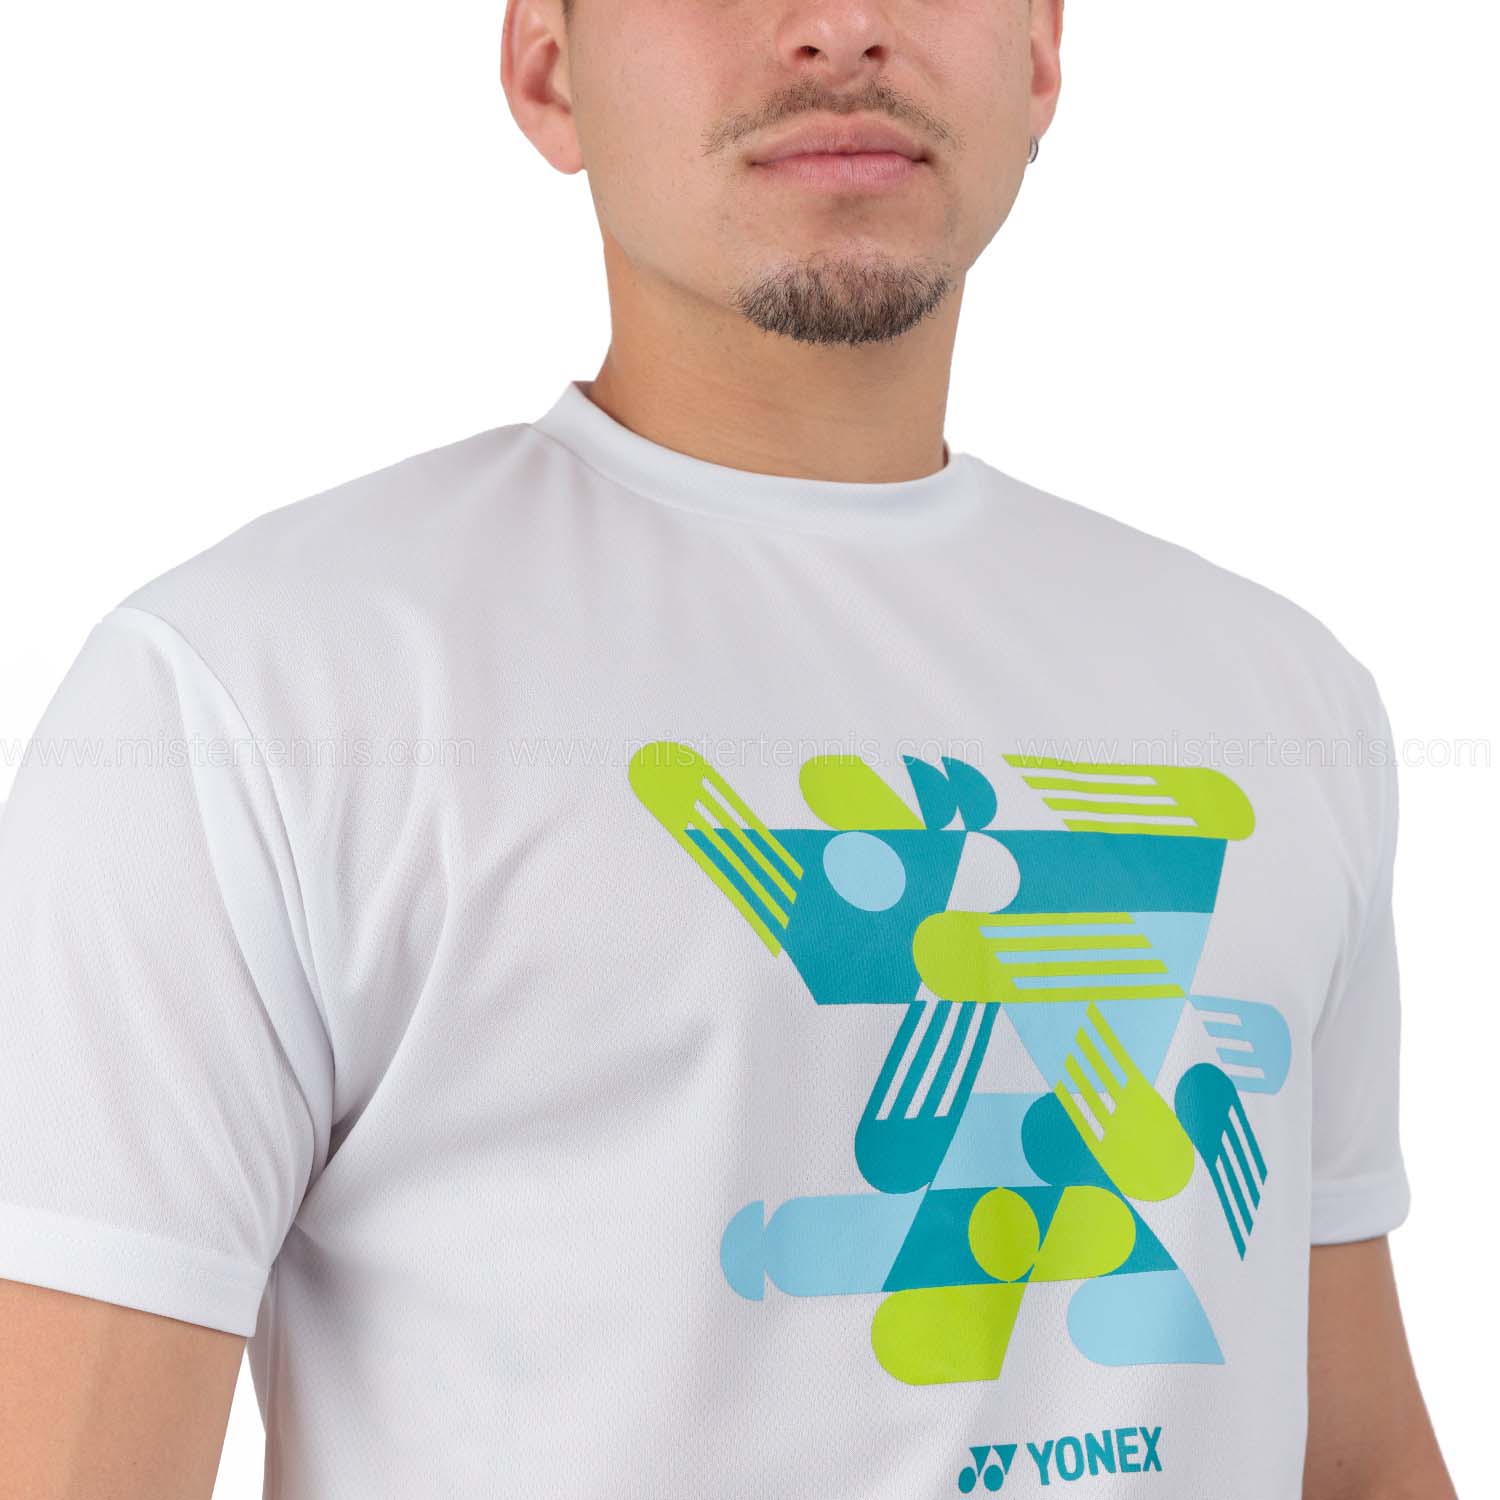 Yonex Practice Court Camiseta - White